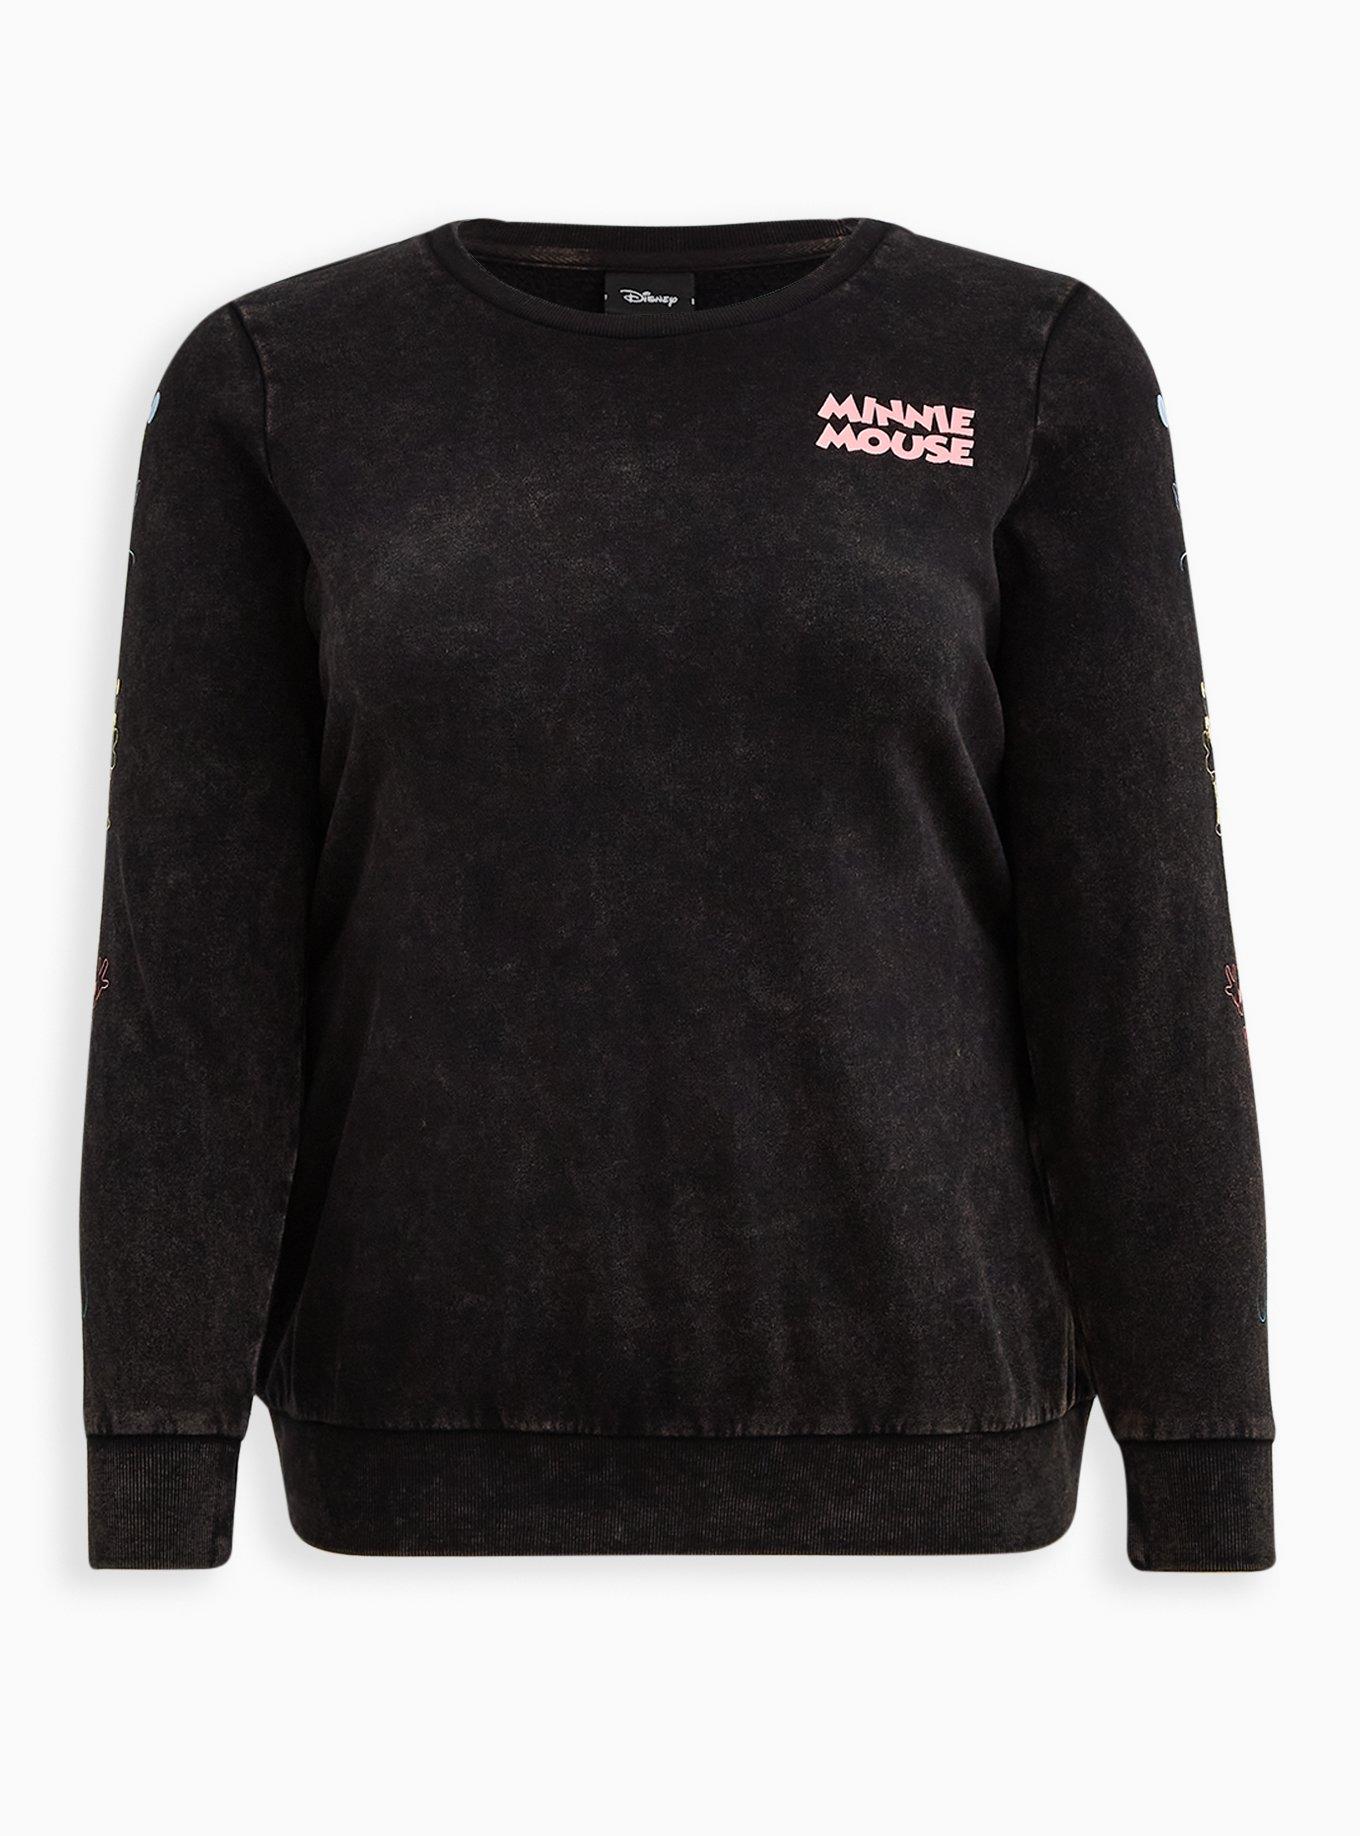 Plus Size - Disney Minnie Mouse Black Mineral Wash Fleece Sweatshirt ...